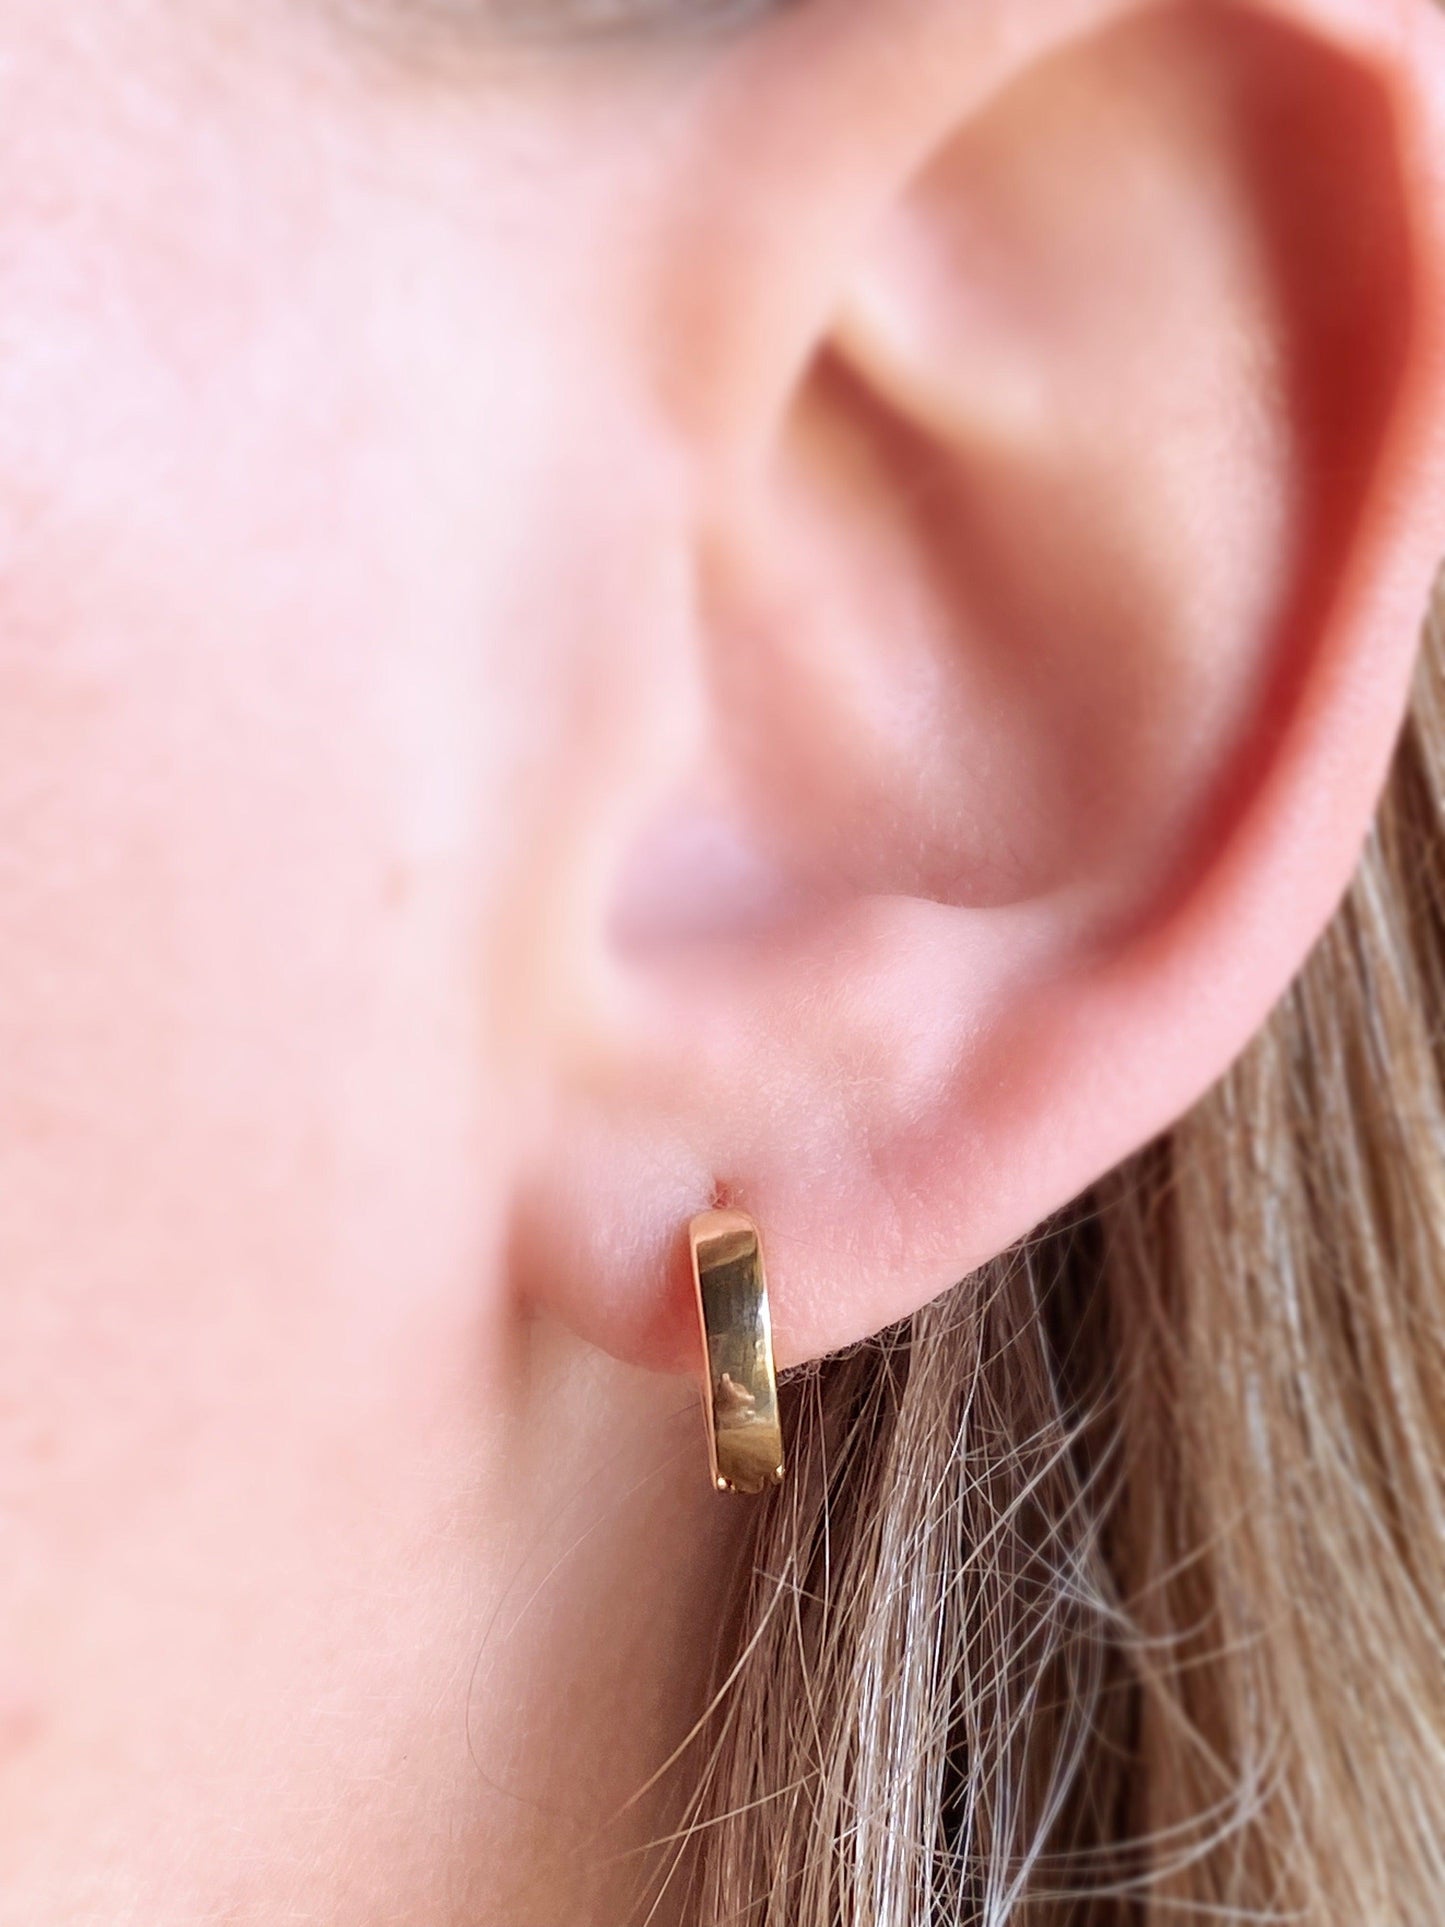 GoldFi 18k Gold Filled Petite Polished Clicker Earrings